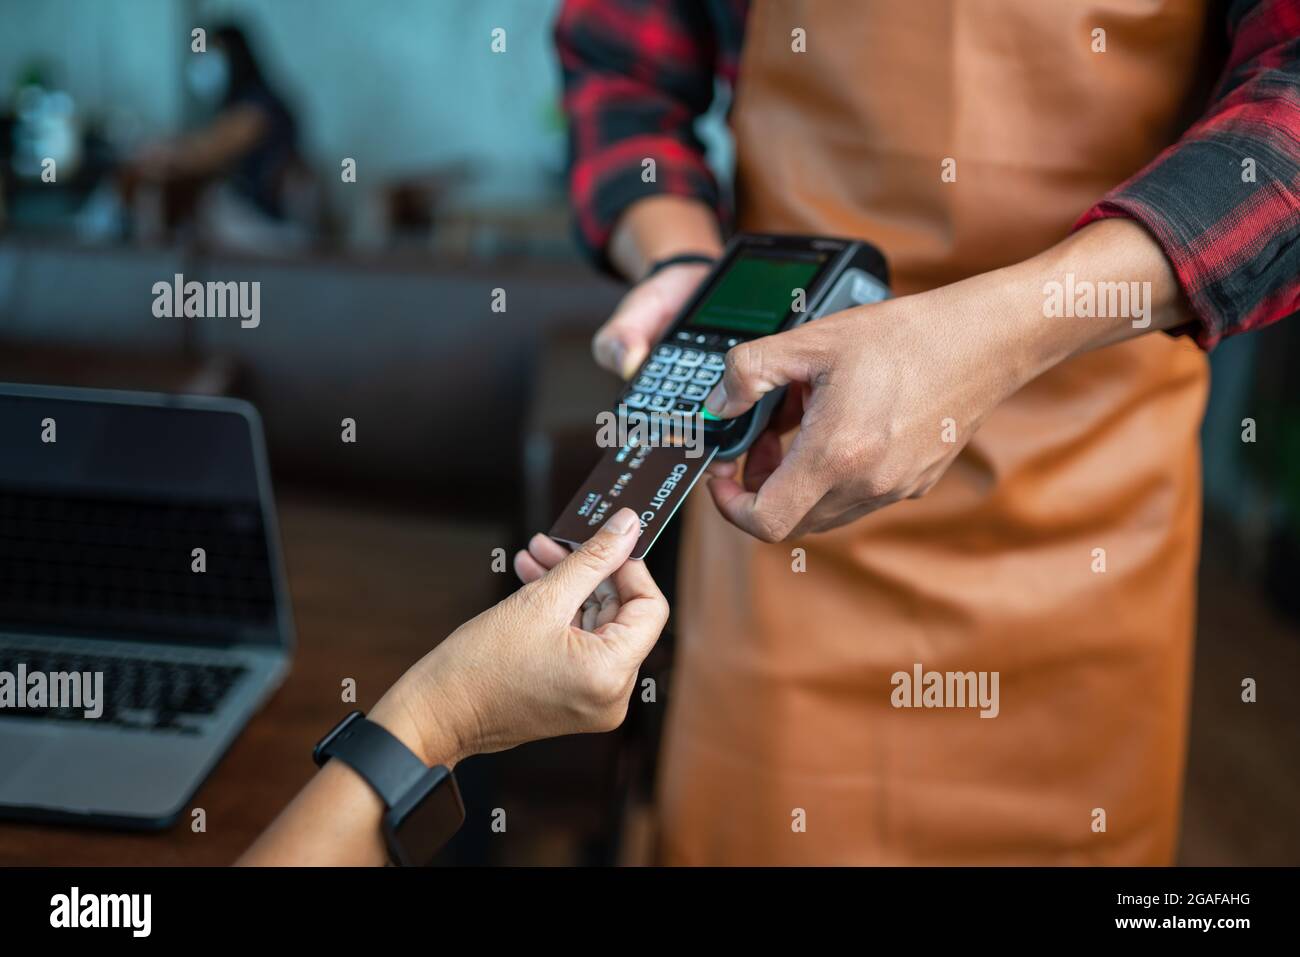 Zahlung per Kreditkarte über Kreditkarte Swipe-Maschine in einem Café Stockfoto